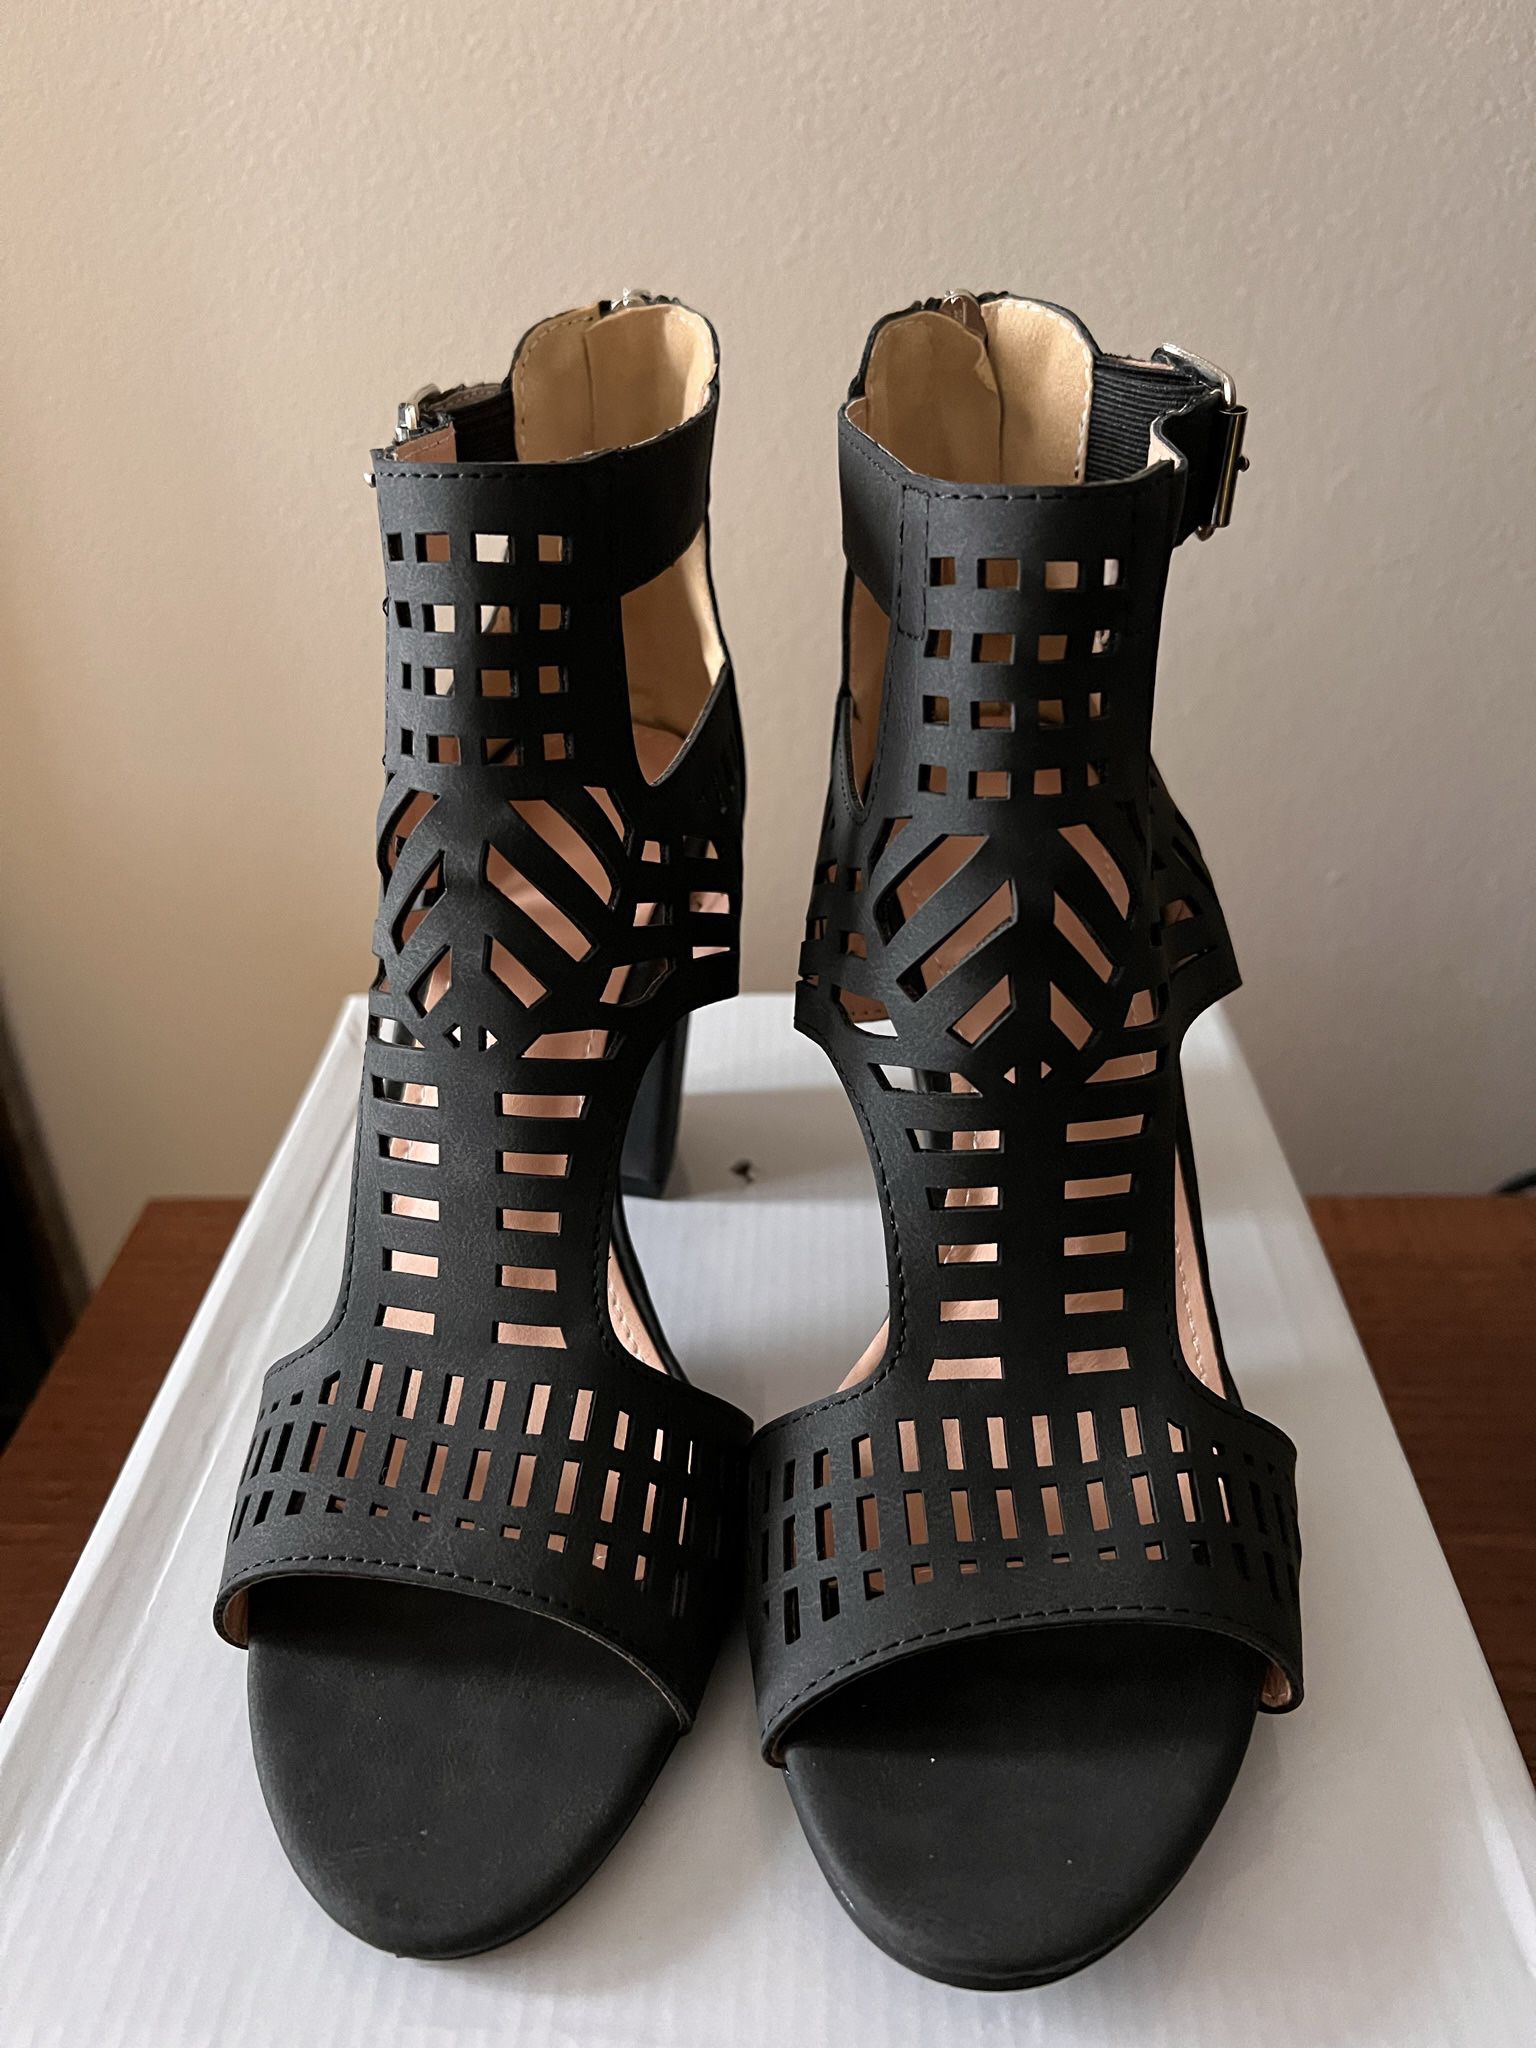 Women's Black Chunky Heel Sandals - Size US 8.5M/EU 39 